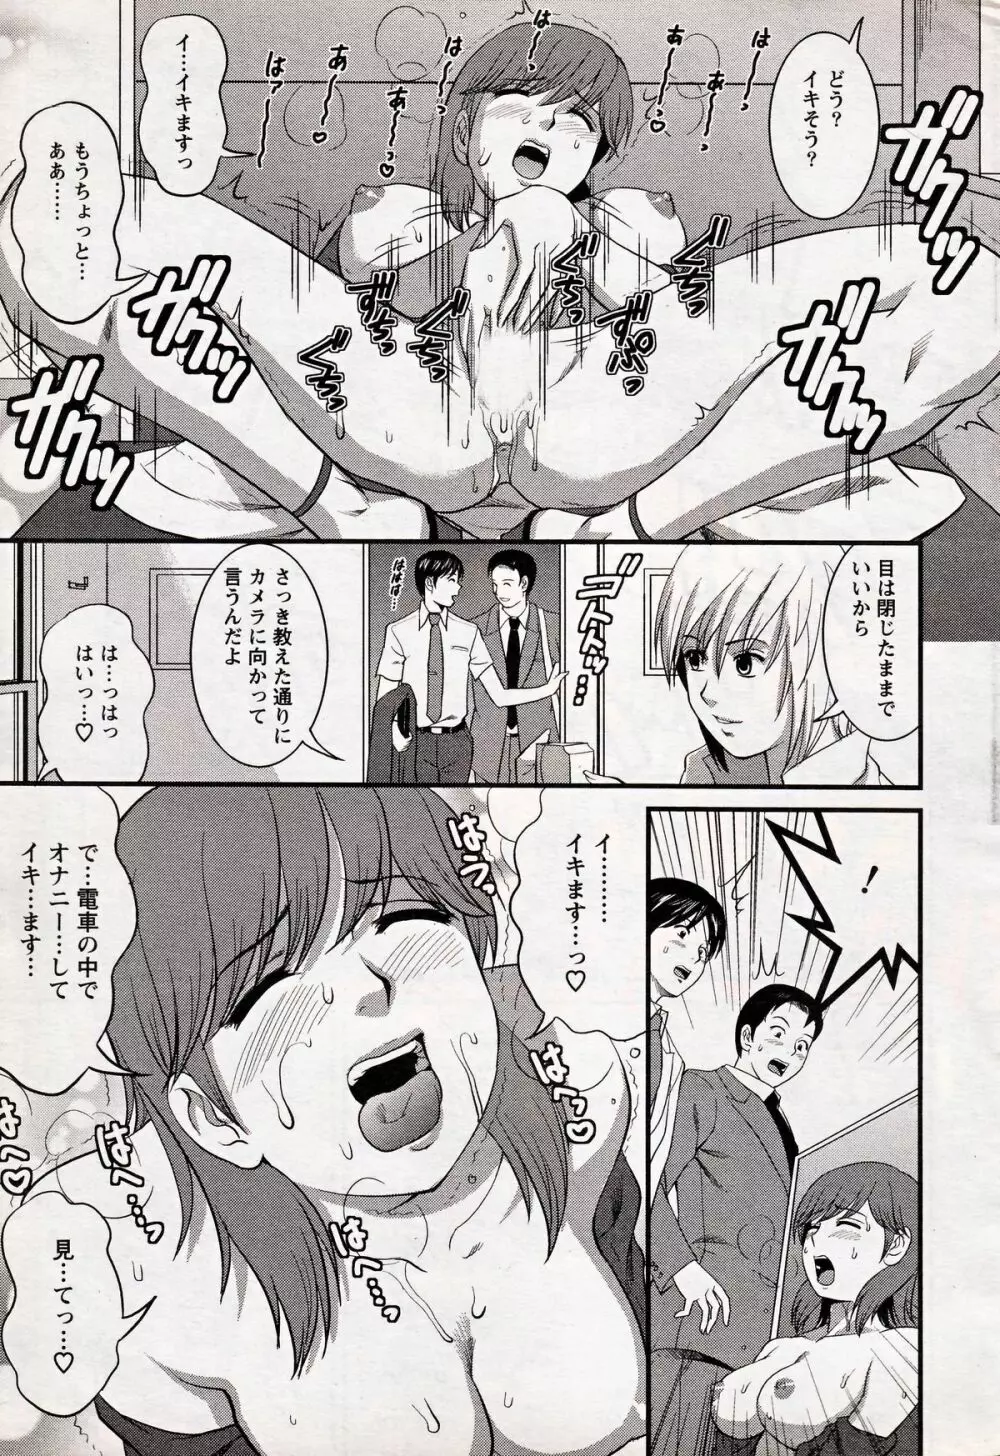 Haken no Muuko-san 18 15ページ